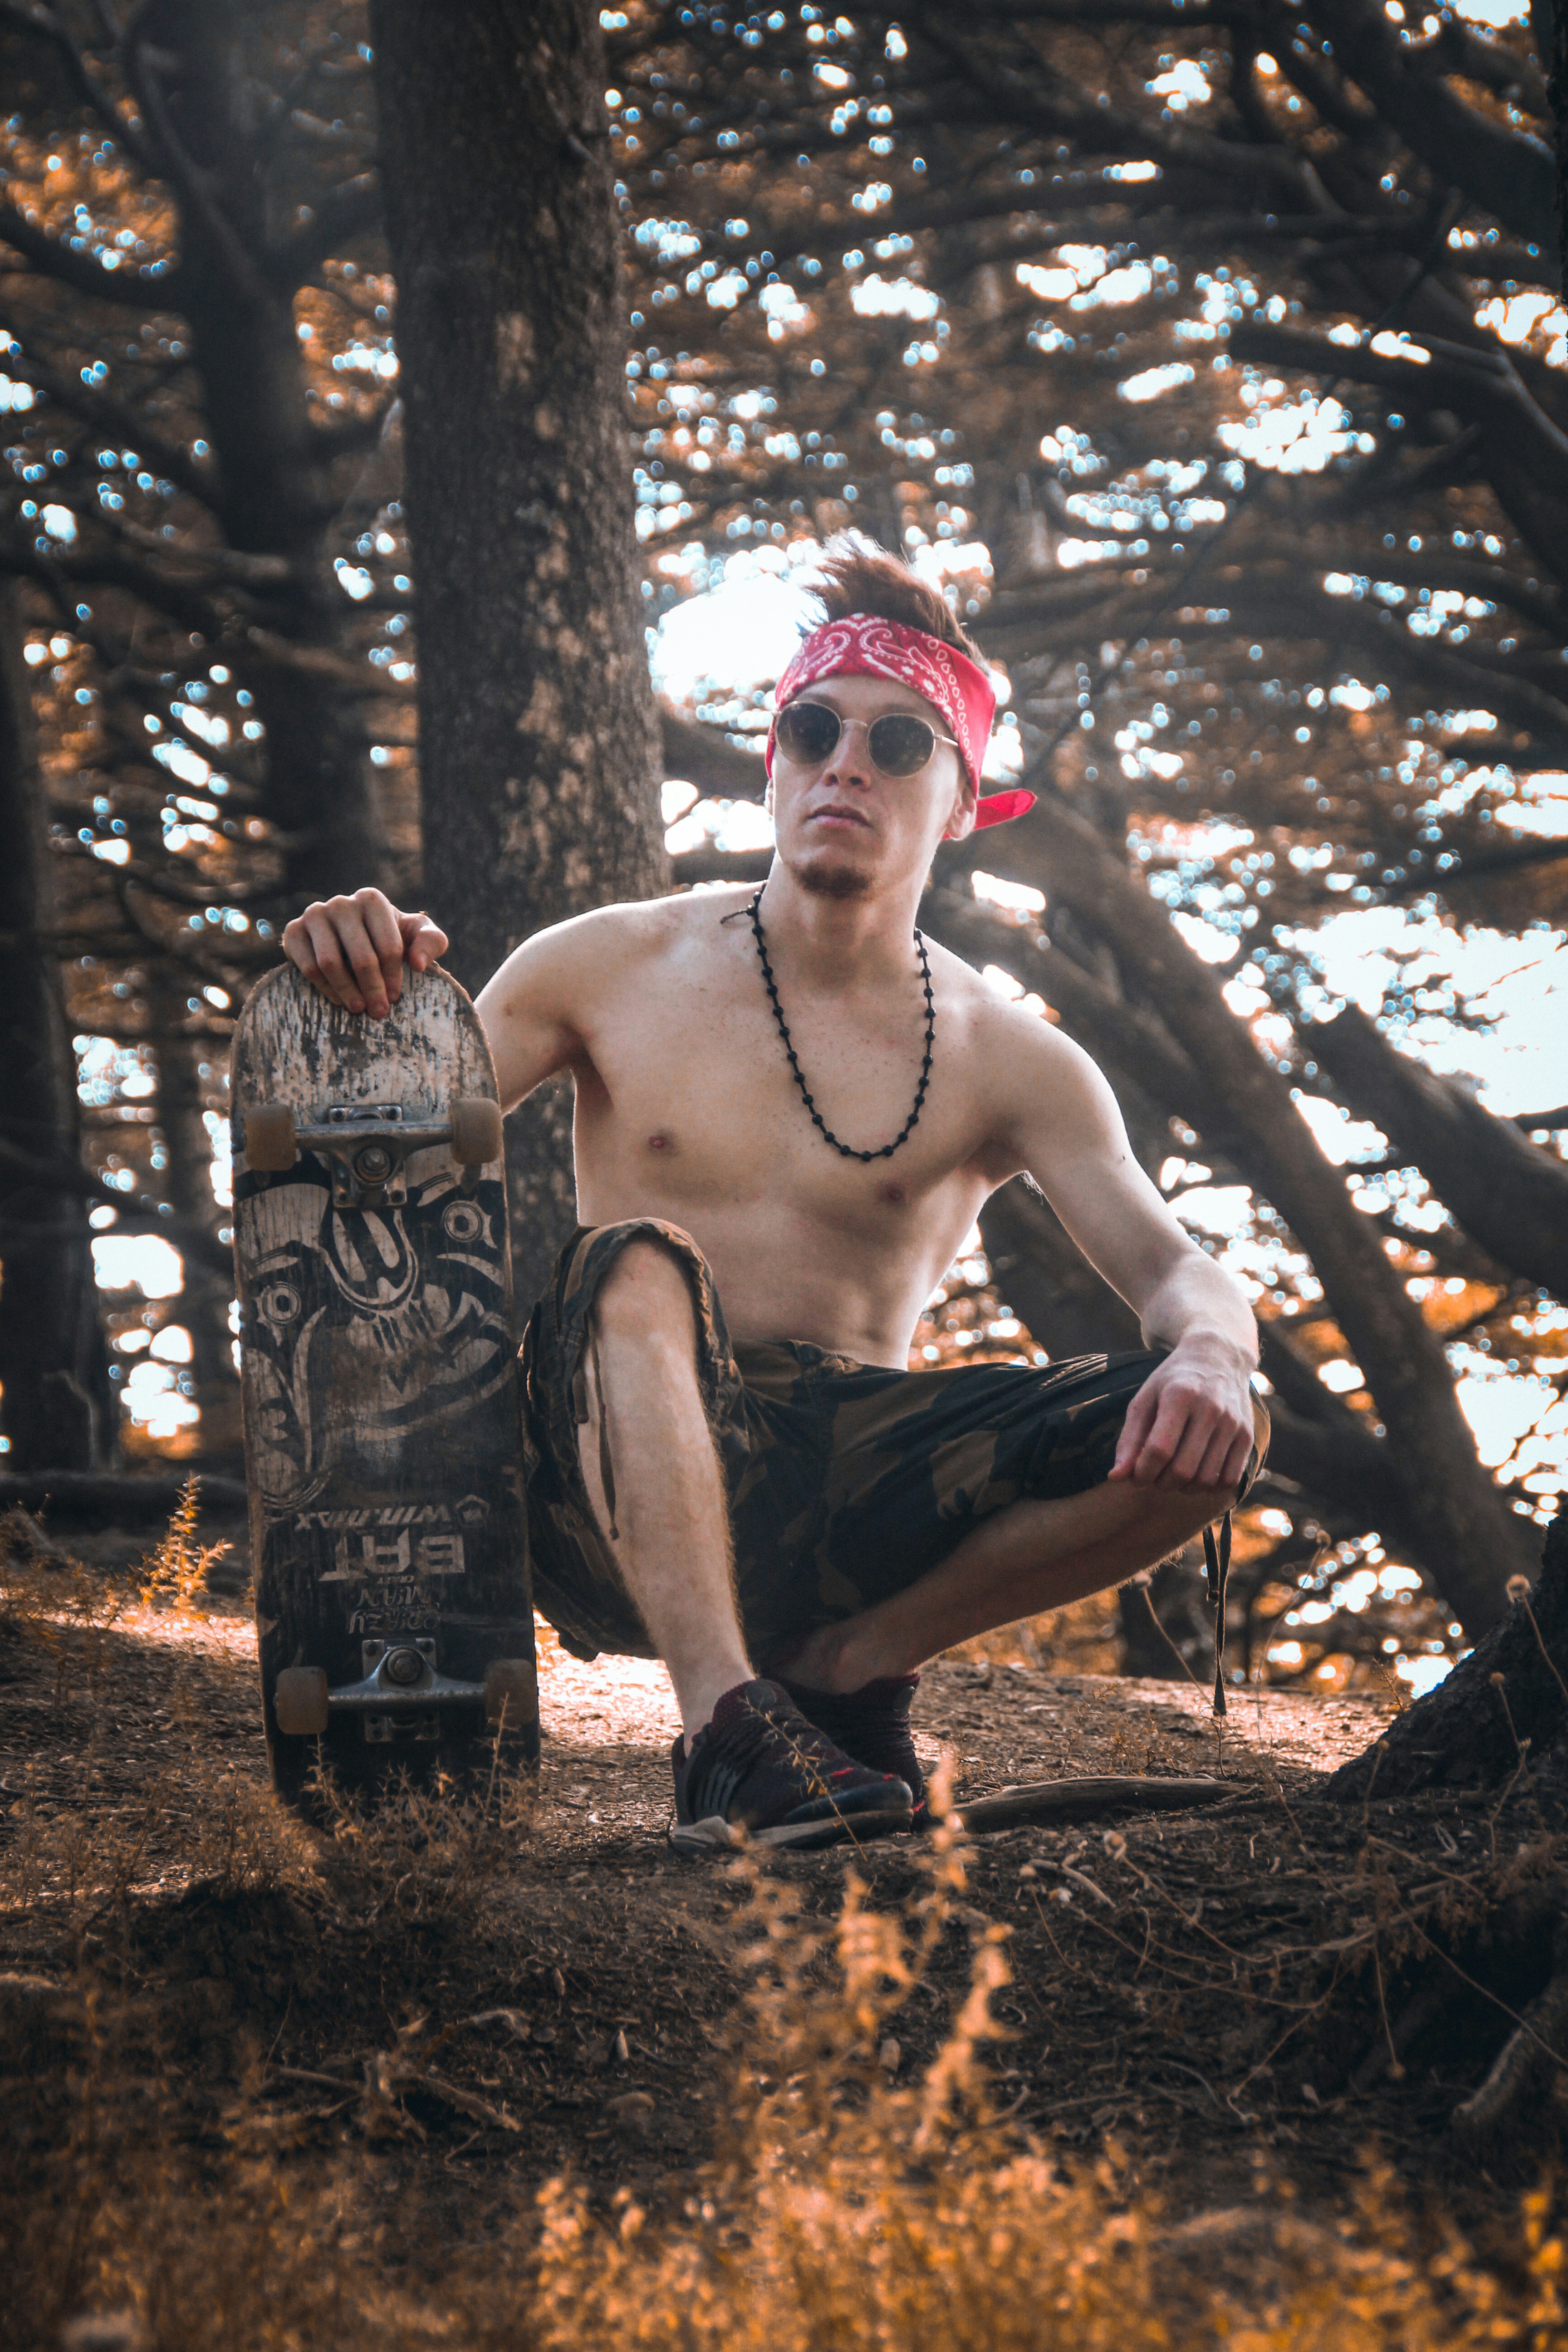 man squatting and holding skateboard near trees